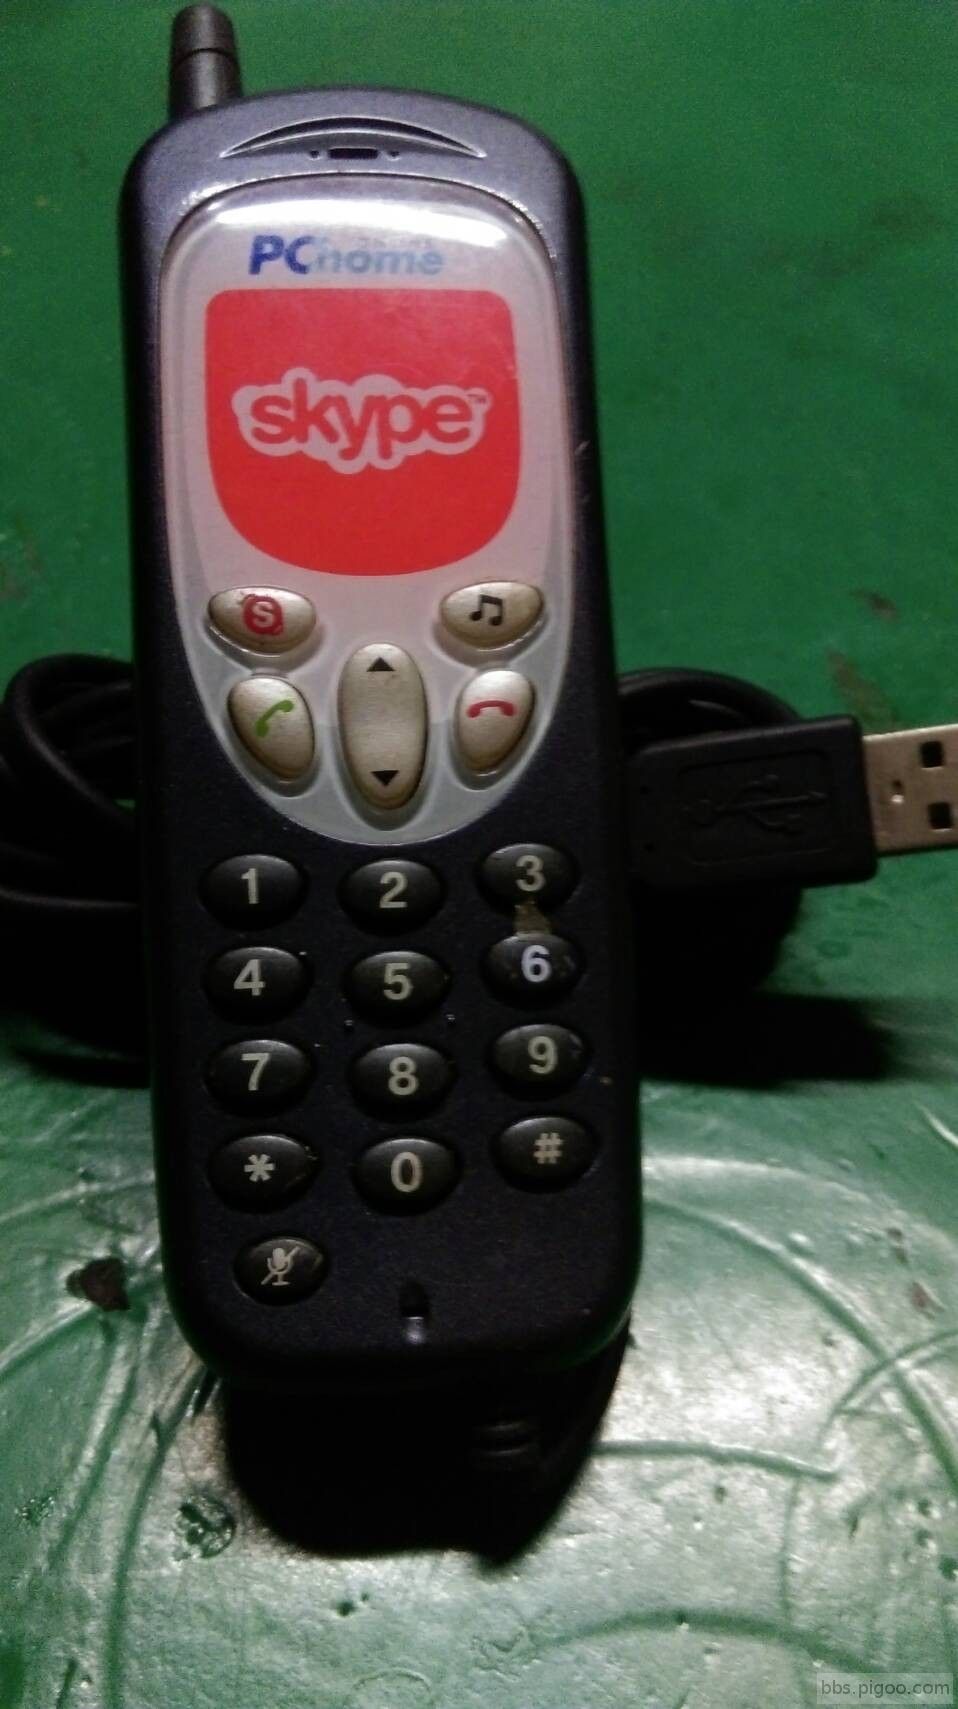 skype02